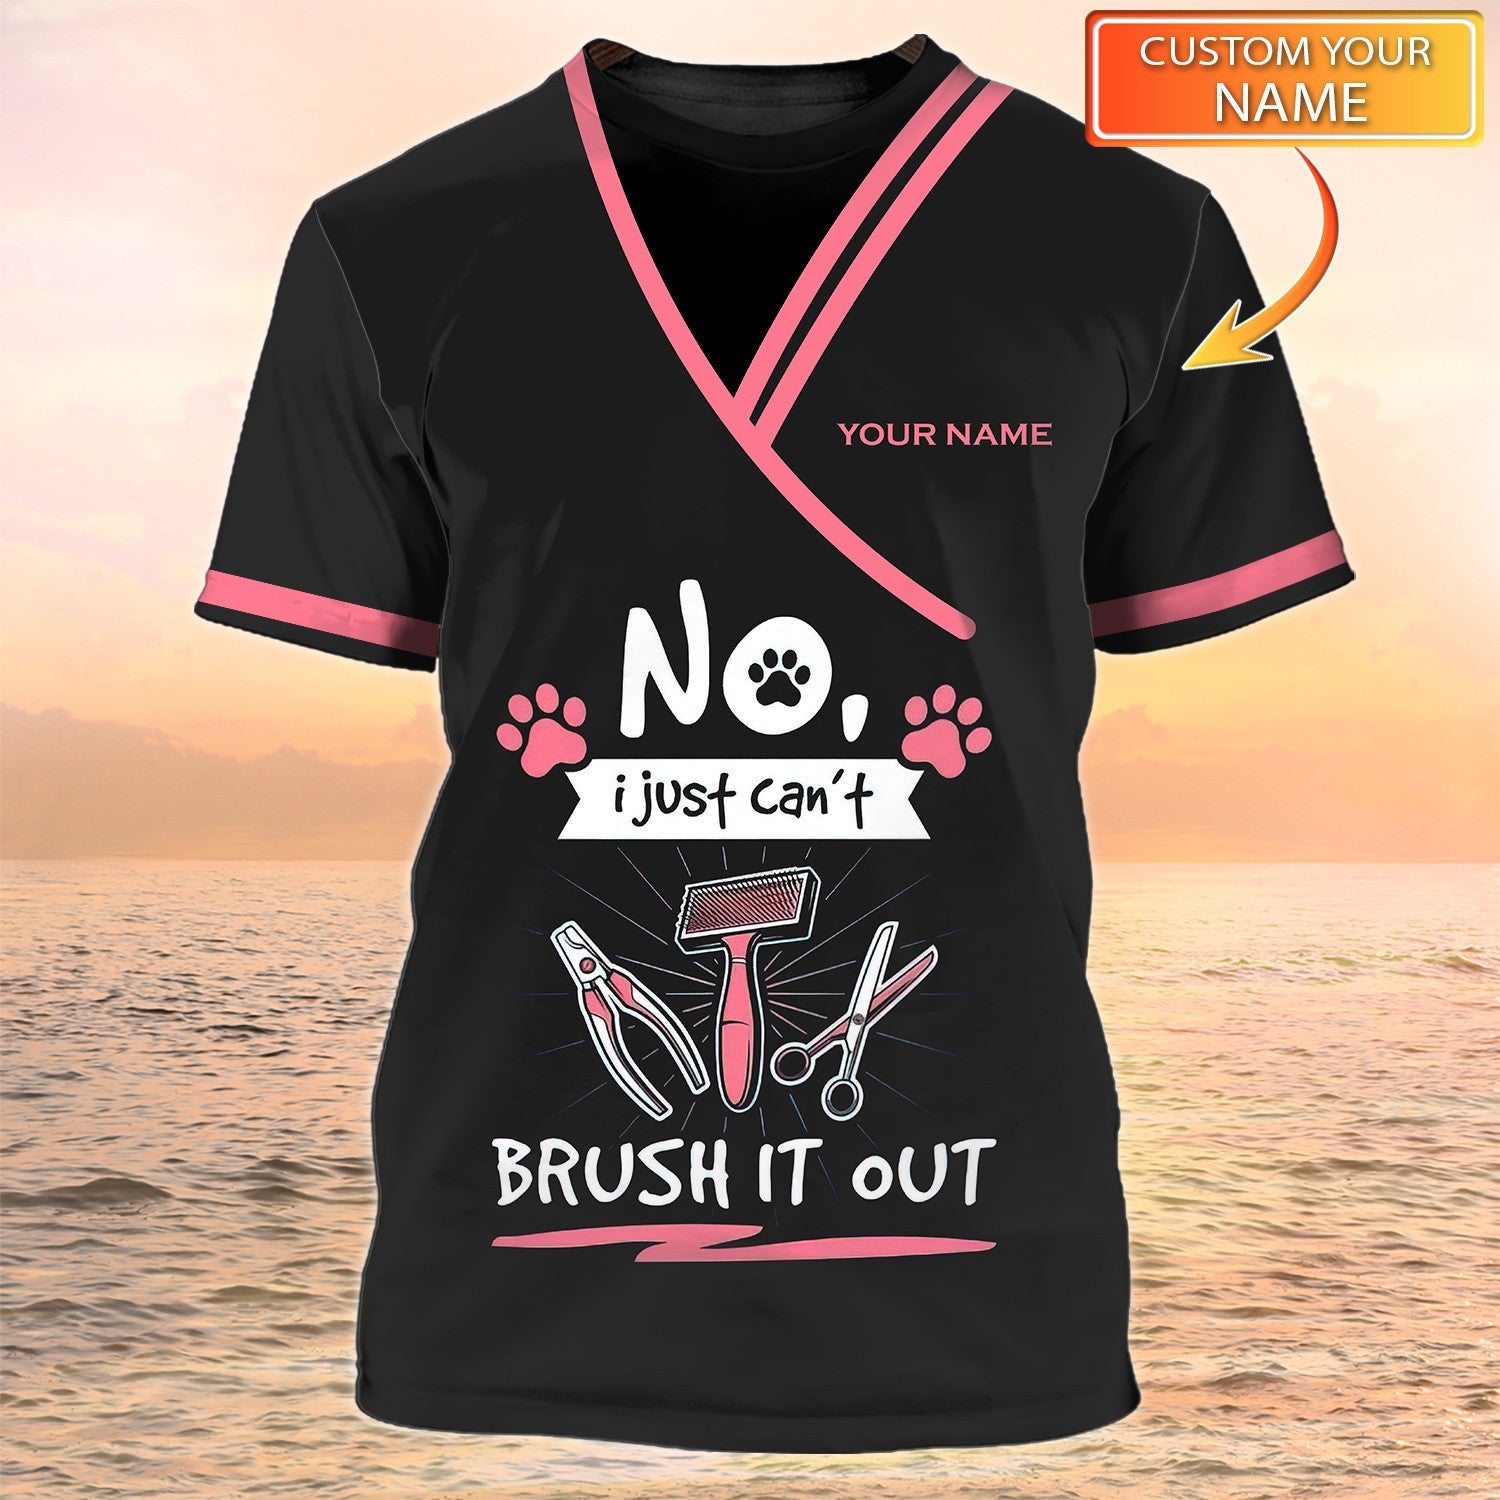 Pet Grooming Shirt Dog Groomer Custom Tshirt Grooming Uniform Black